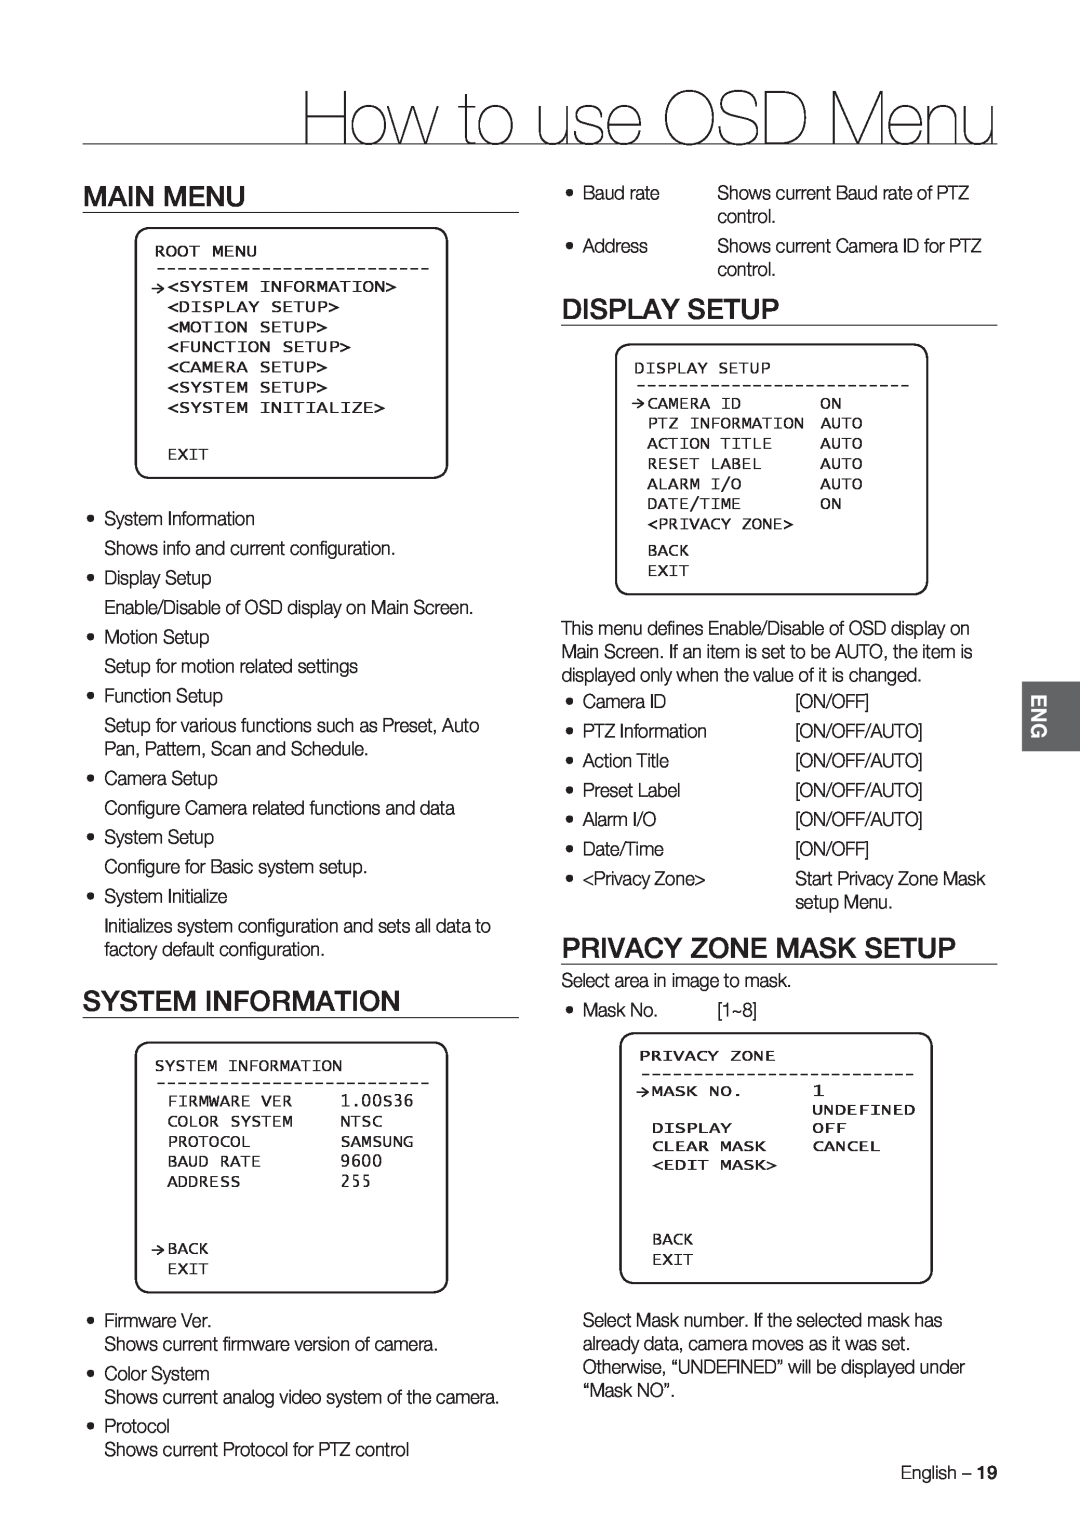 Samsung SCC-C7478P manual How to use OSD Menu, Main Menu, System Information, Display Setup, Privacy Zone Mask Setup 